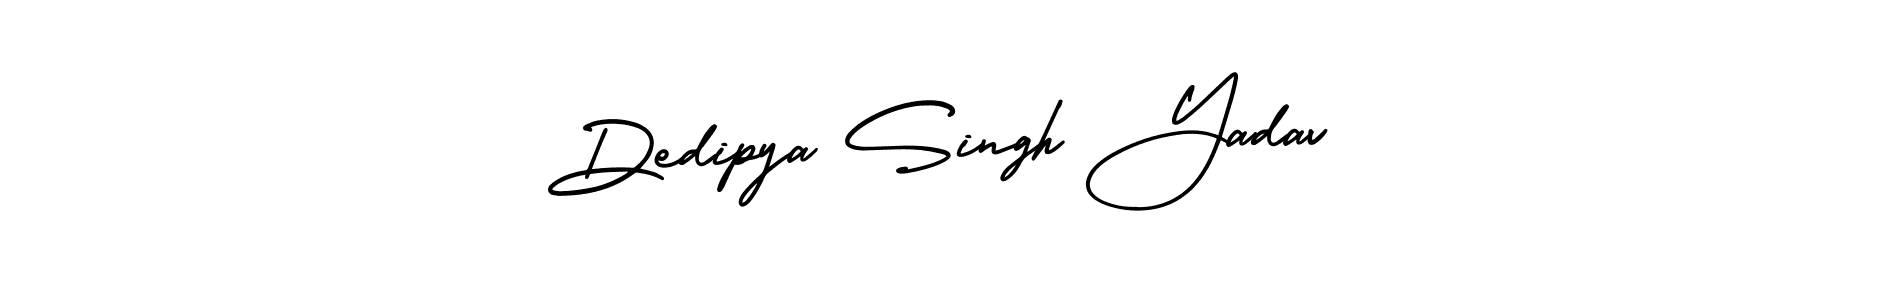 How to Draw Dedipya Singh Yadav signature style? AmerikaSignatureDemo-Regular is a latest design signature styles for name Dedipya Singh Yadav. Dedipya Singh Yadav signature style 3 images and pictures png